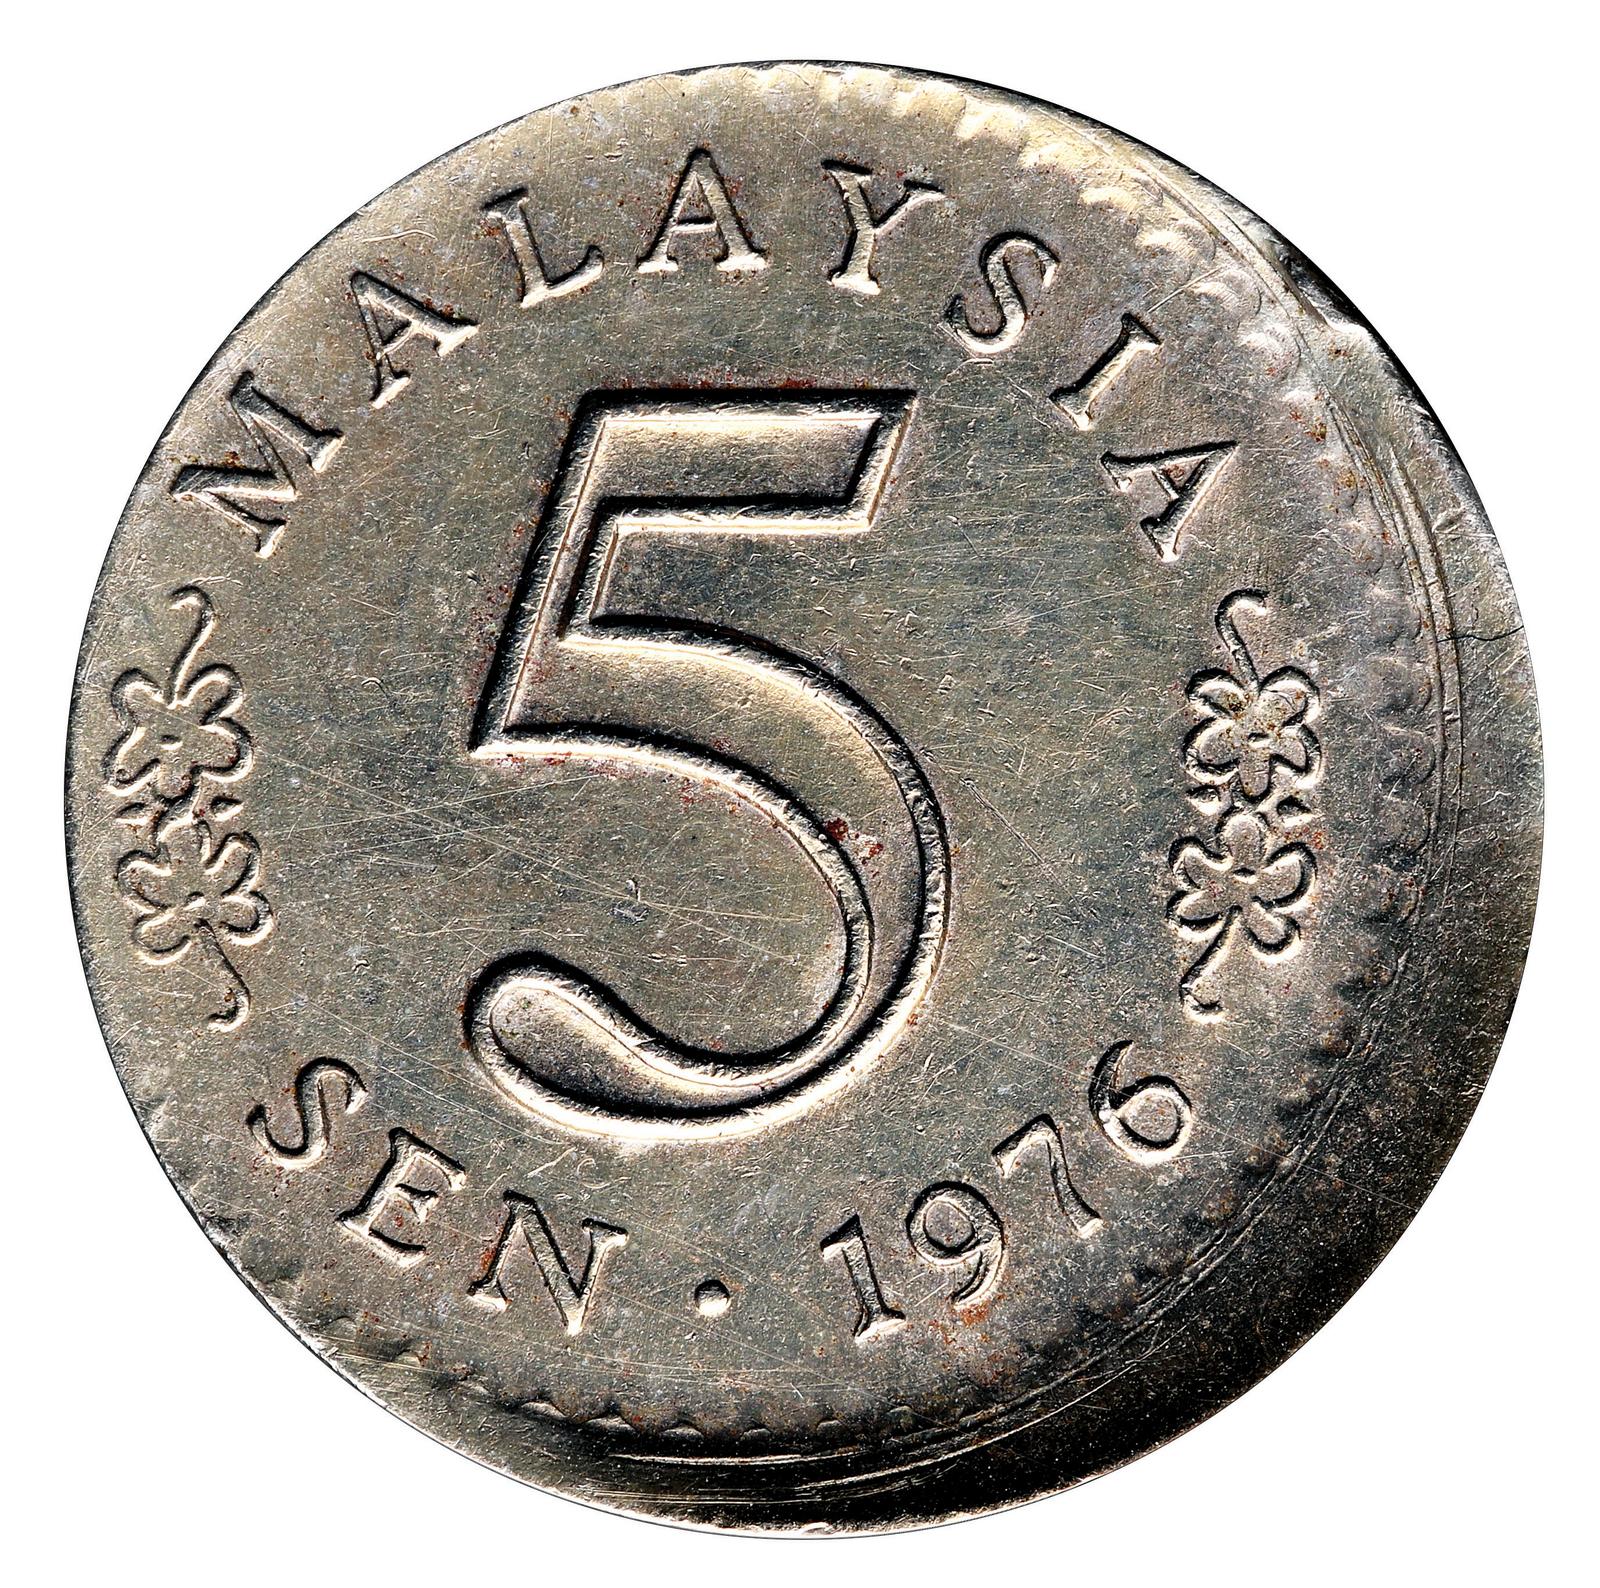 Malaysia, 5S, 1976; 20S, 1990, Both Mint Error, Struck Off Center 